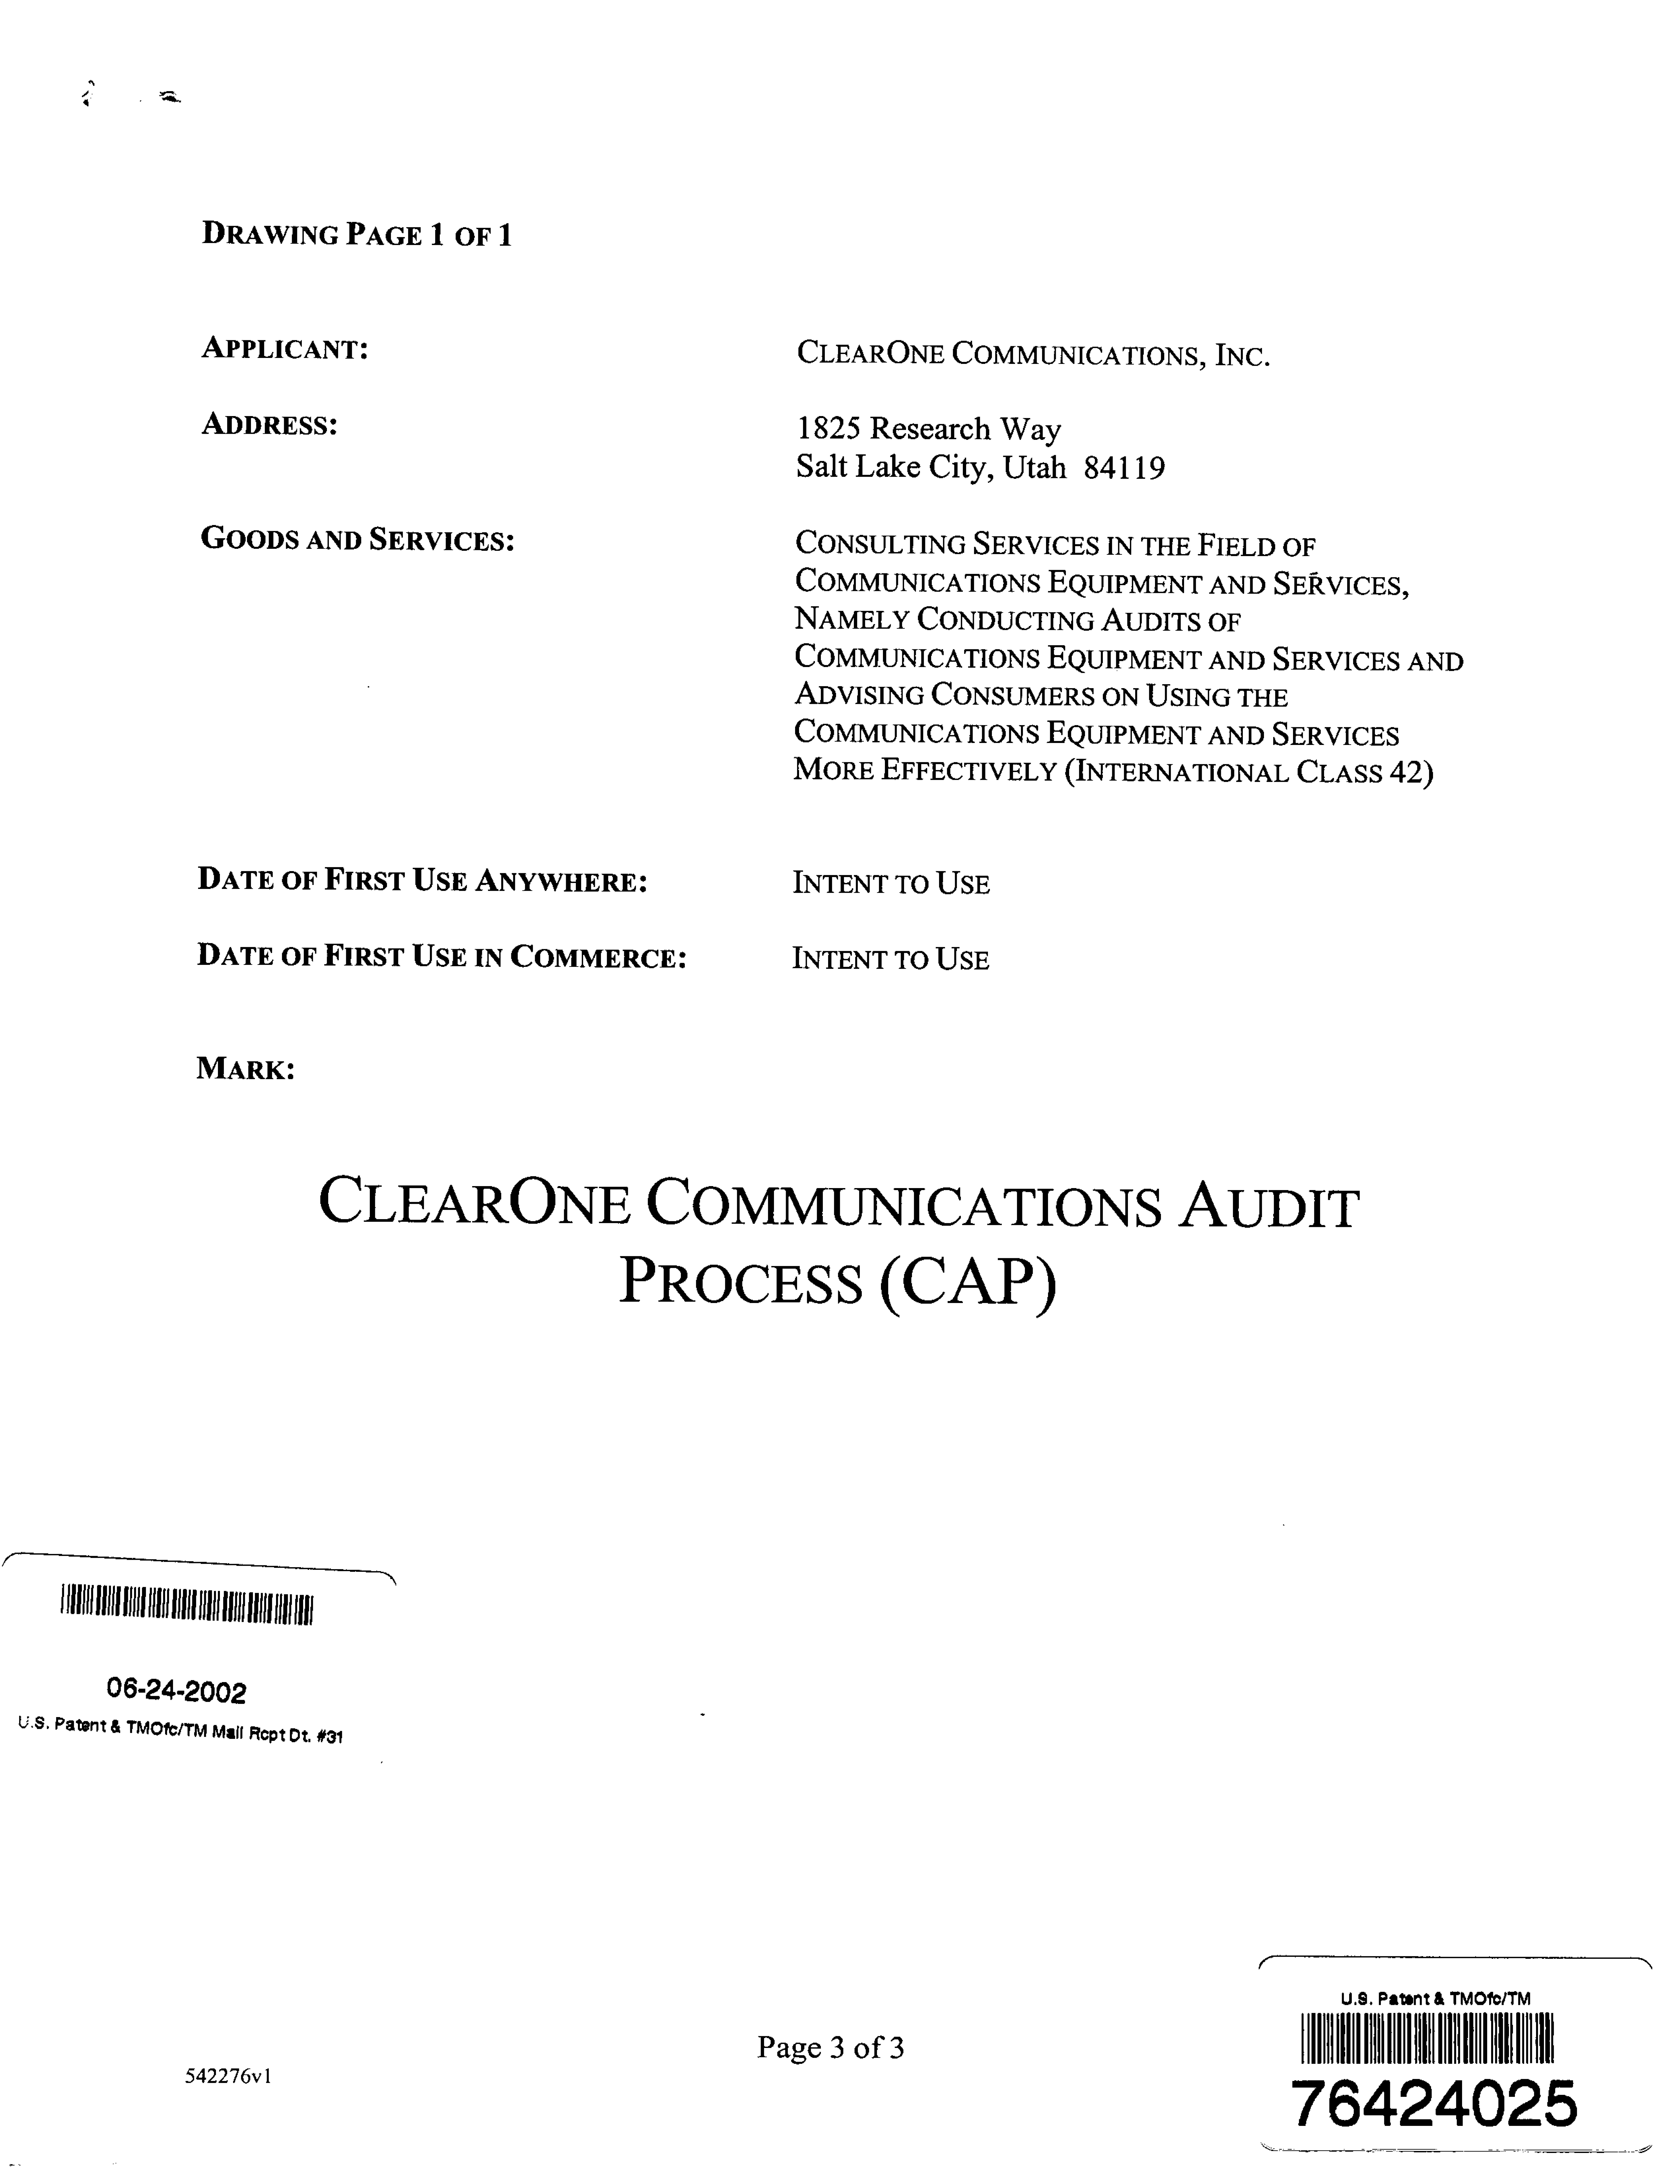  CLEARONE COMMUNICATIONS AUDIT PROCESS (CAP)